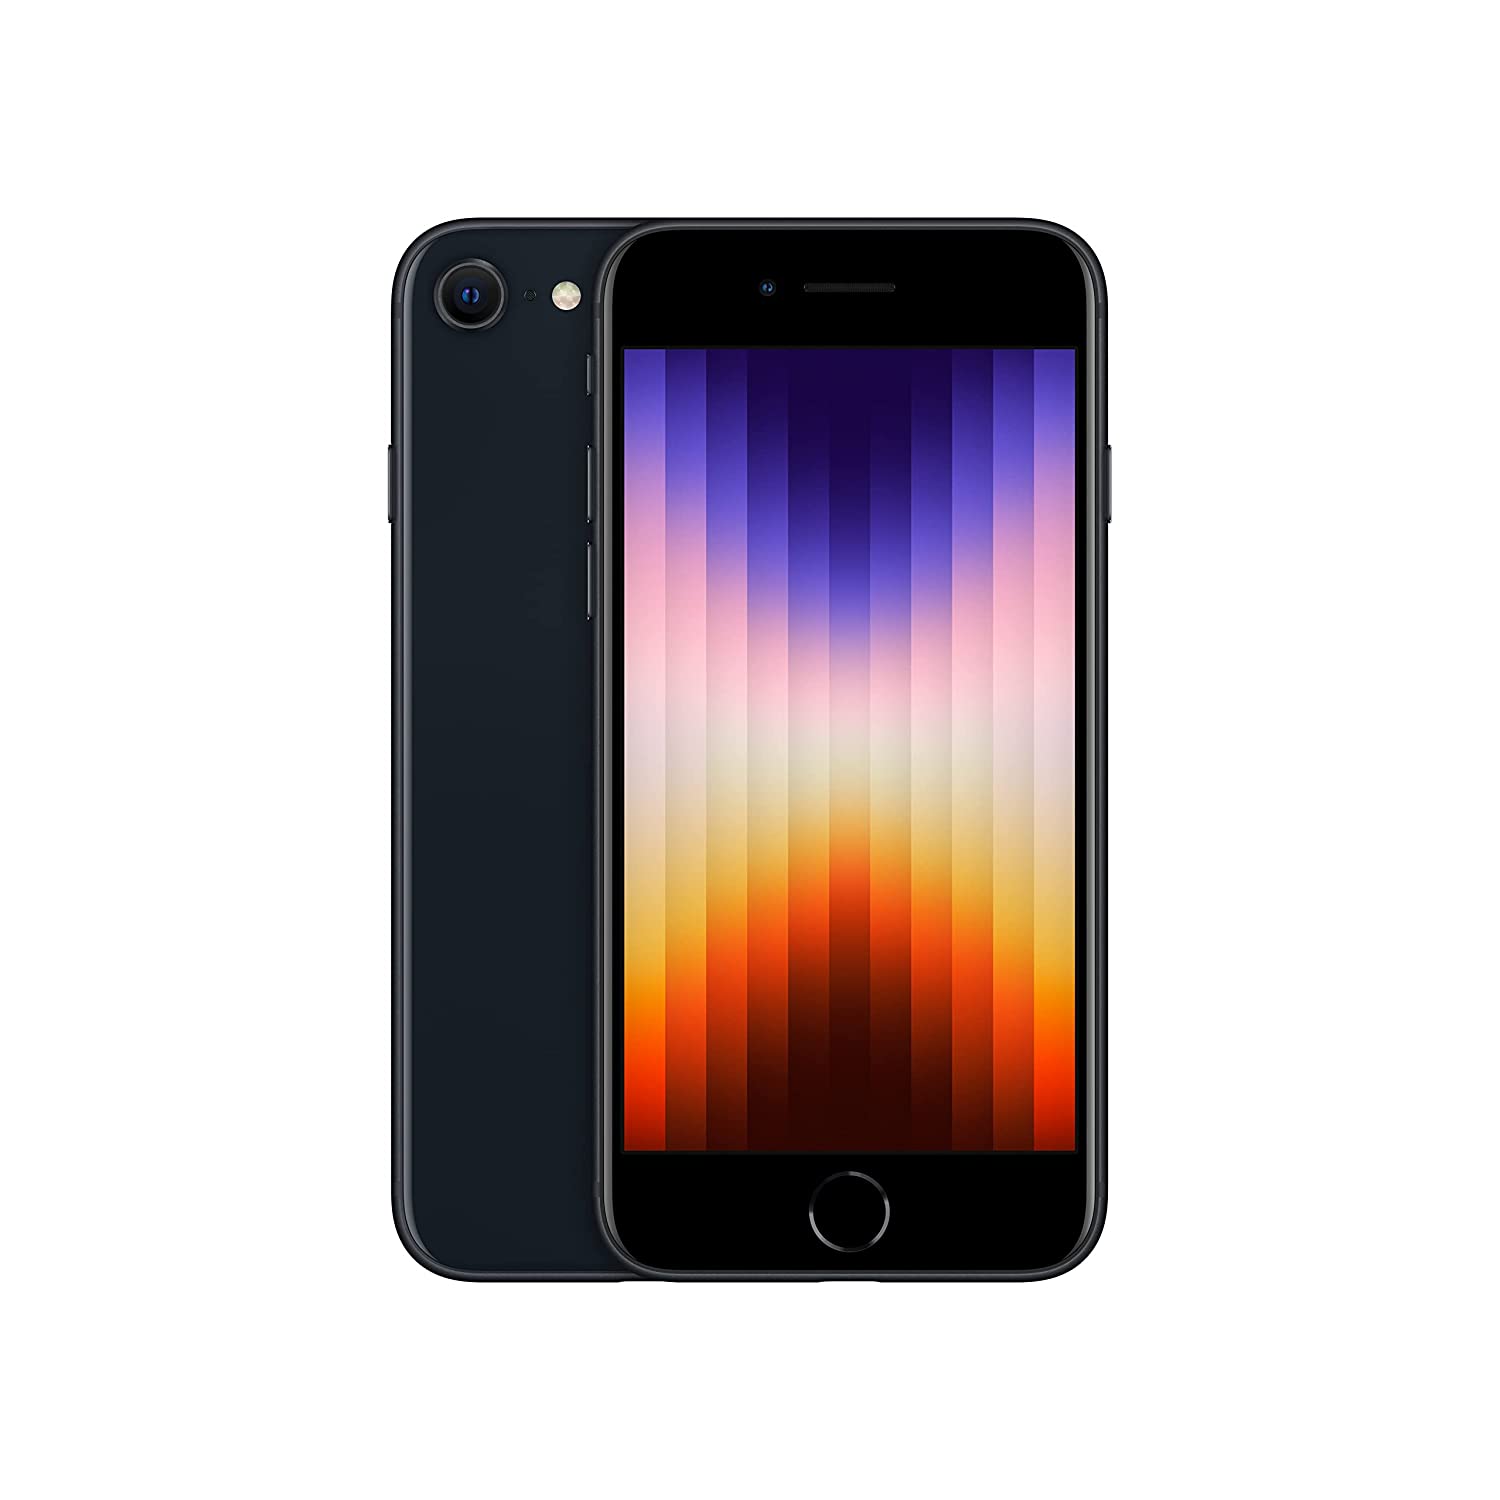 Apple iPhone SE (64 GB) – Midnight (3rd Generation)